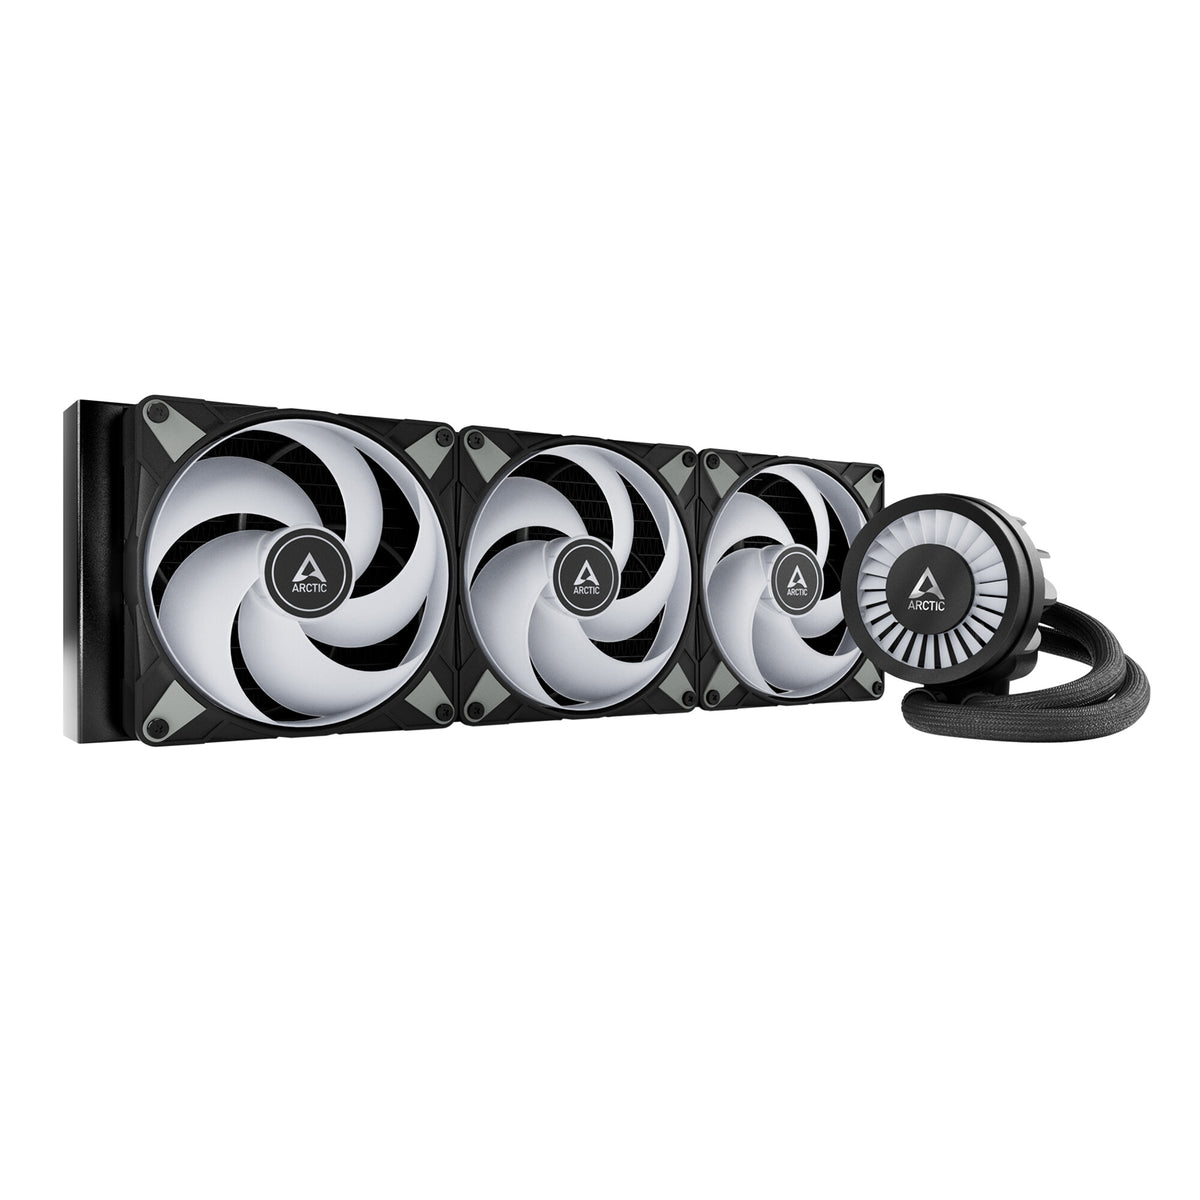 ARCTIC Liquid Freezer III 420 A-RGB - All-in-One Liquid CPU Cooler in Black - 420mm